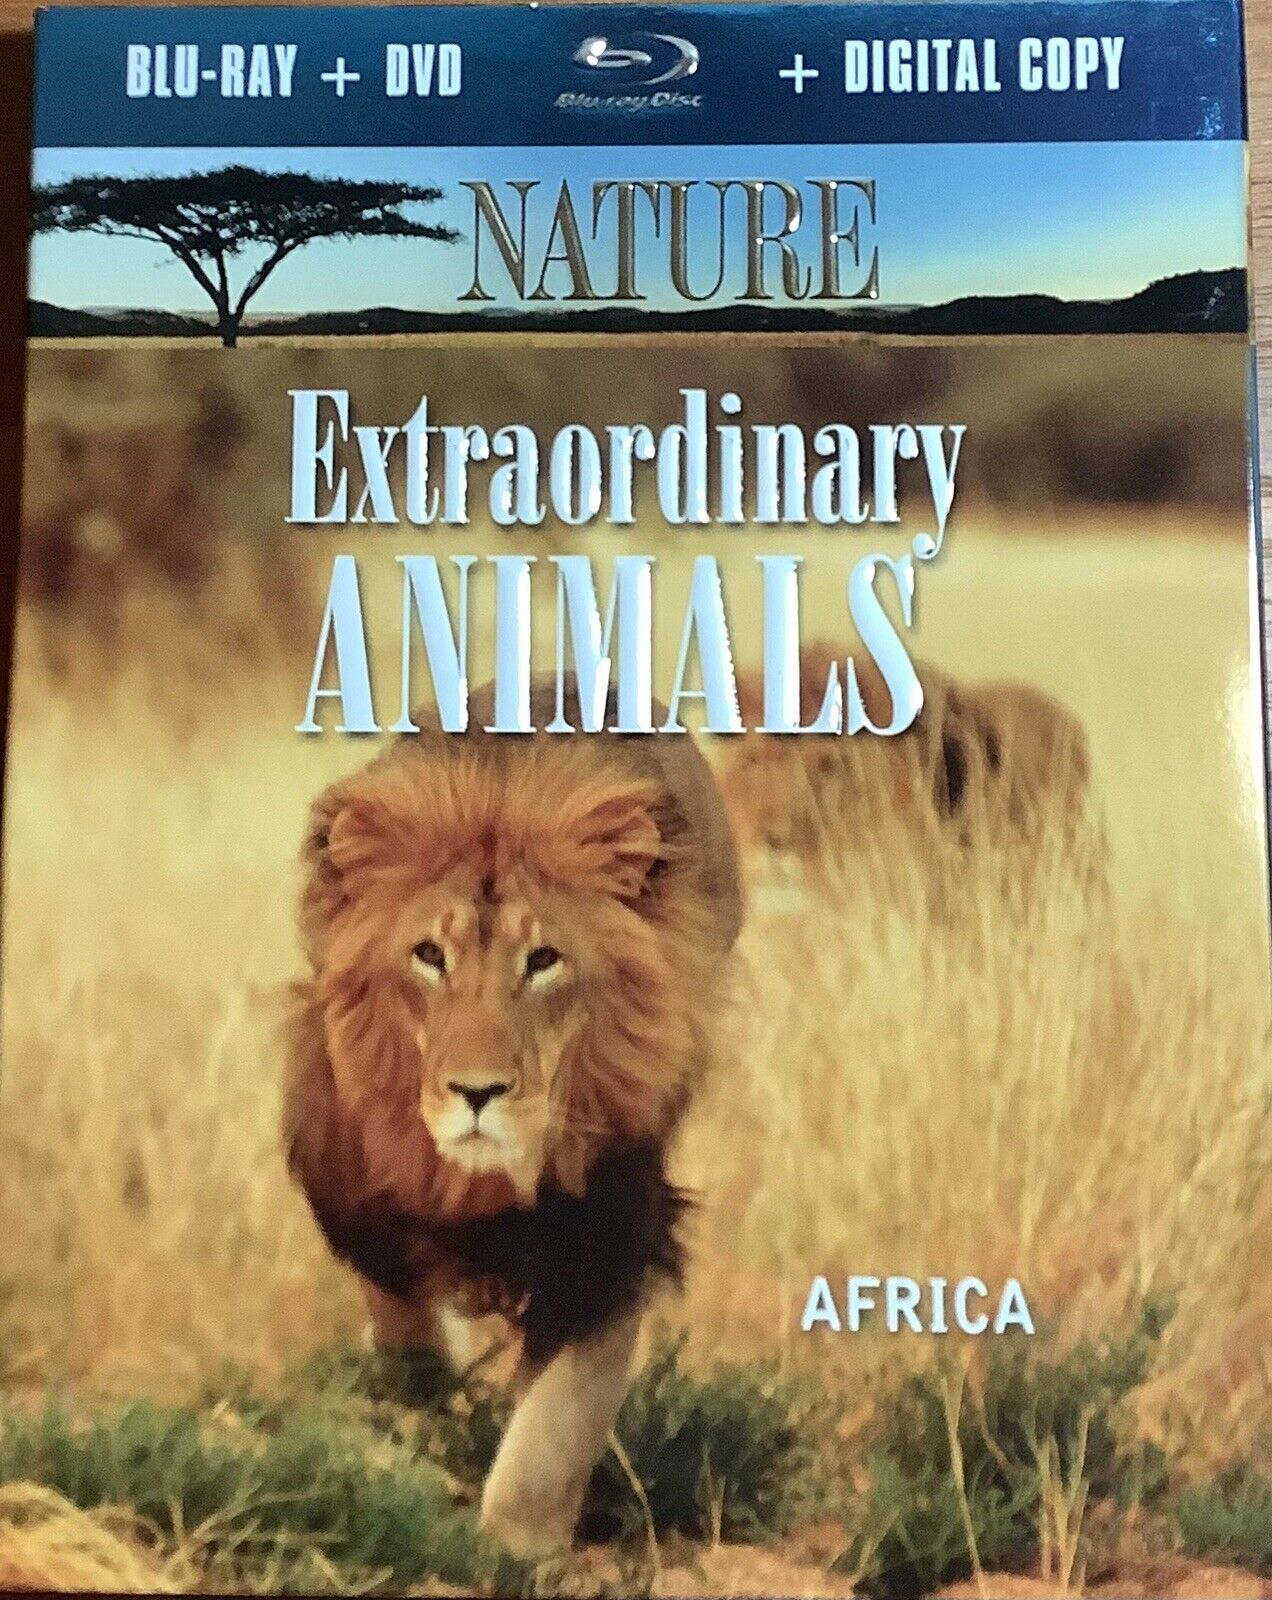 Nature: Extraordinary Animals: Africa - Blu-ray Documentary 2010 NR